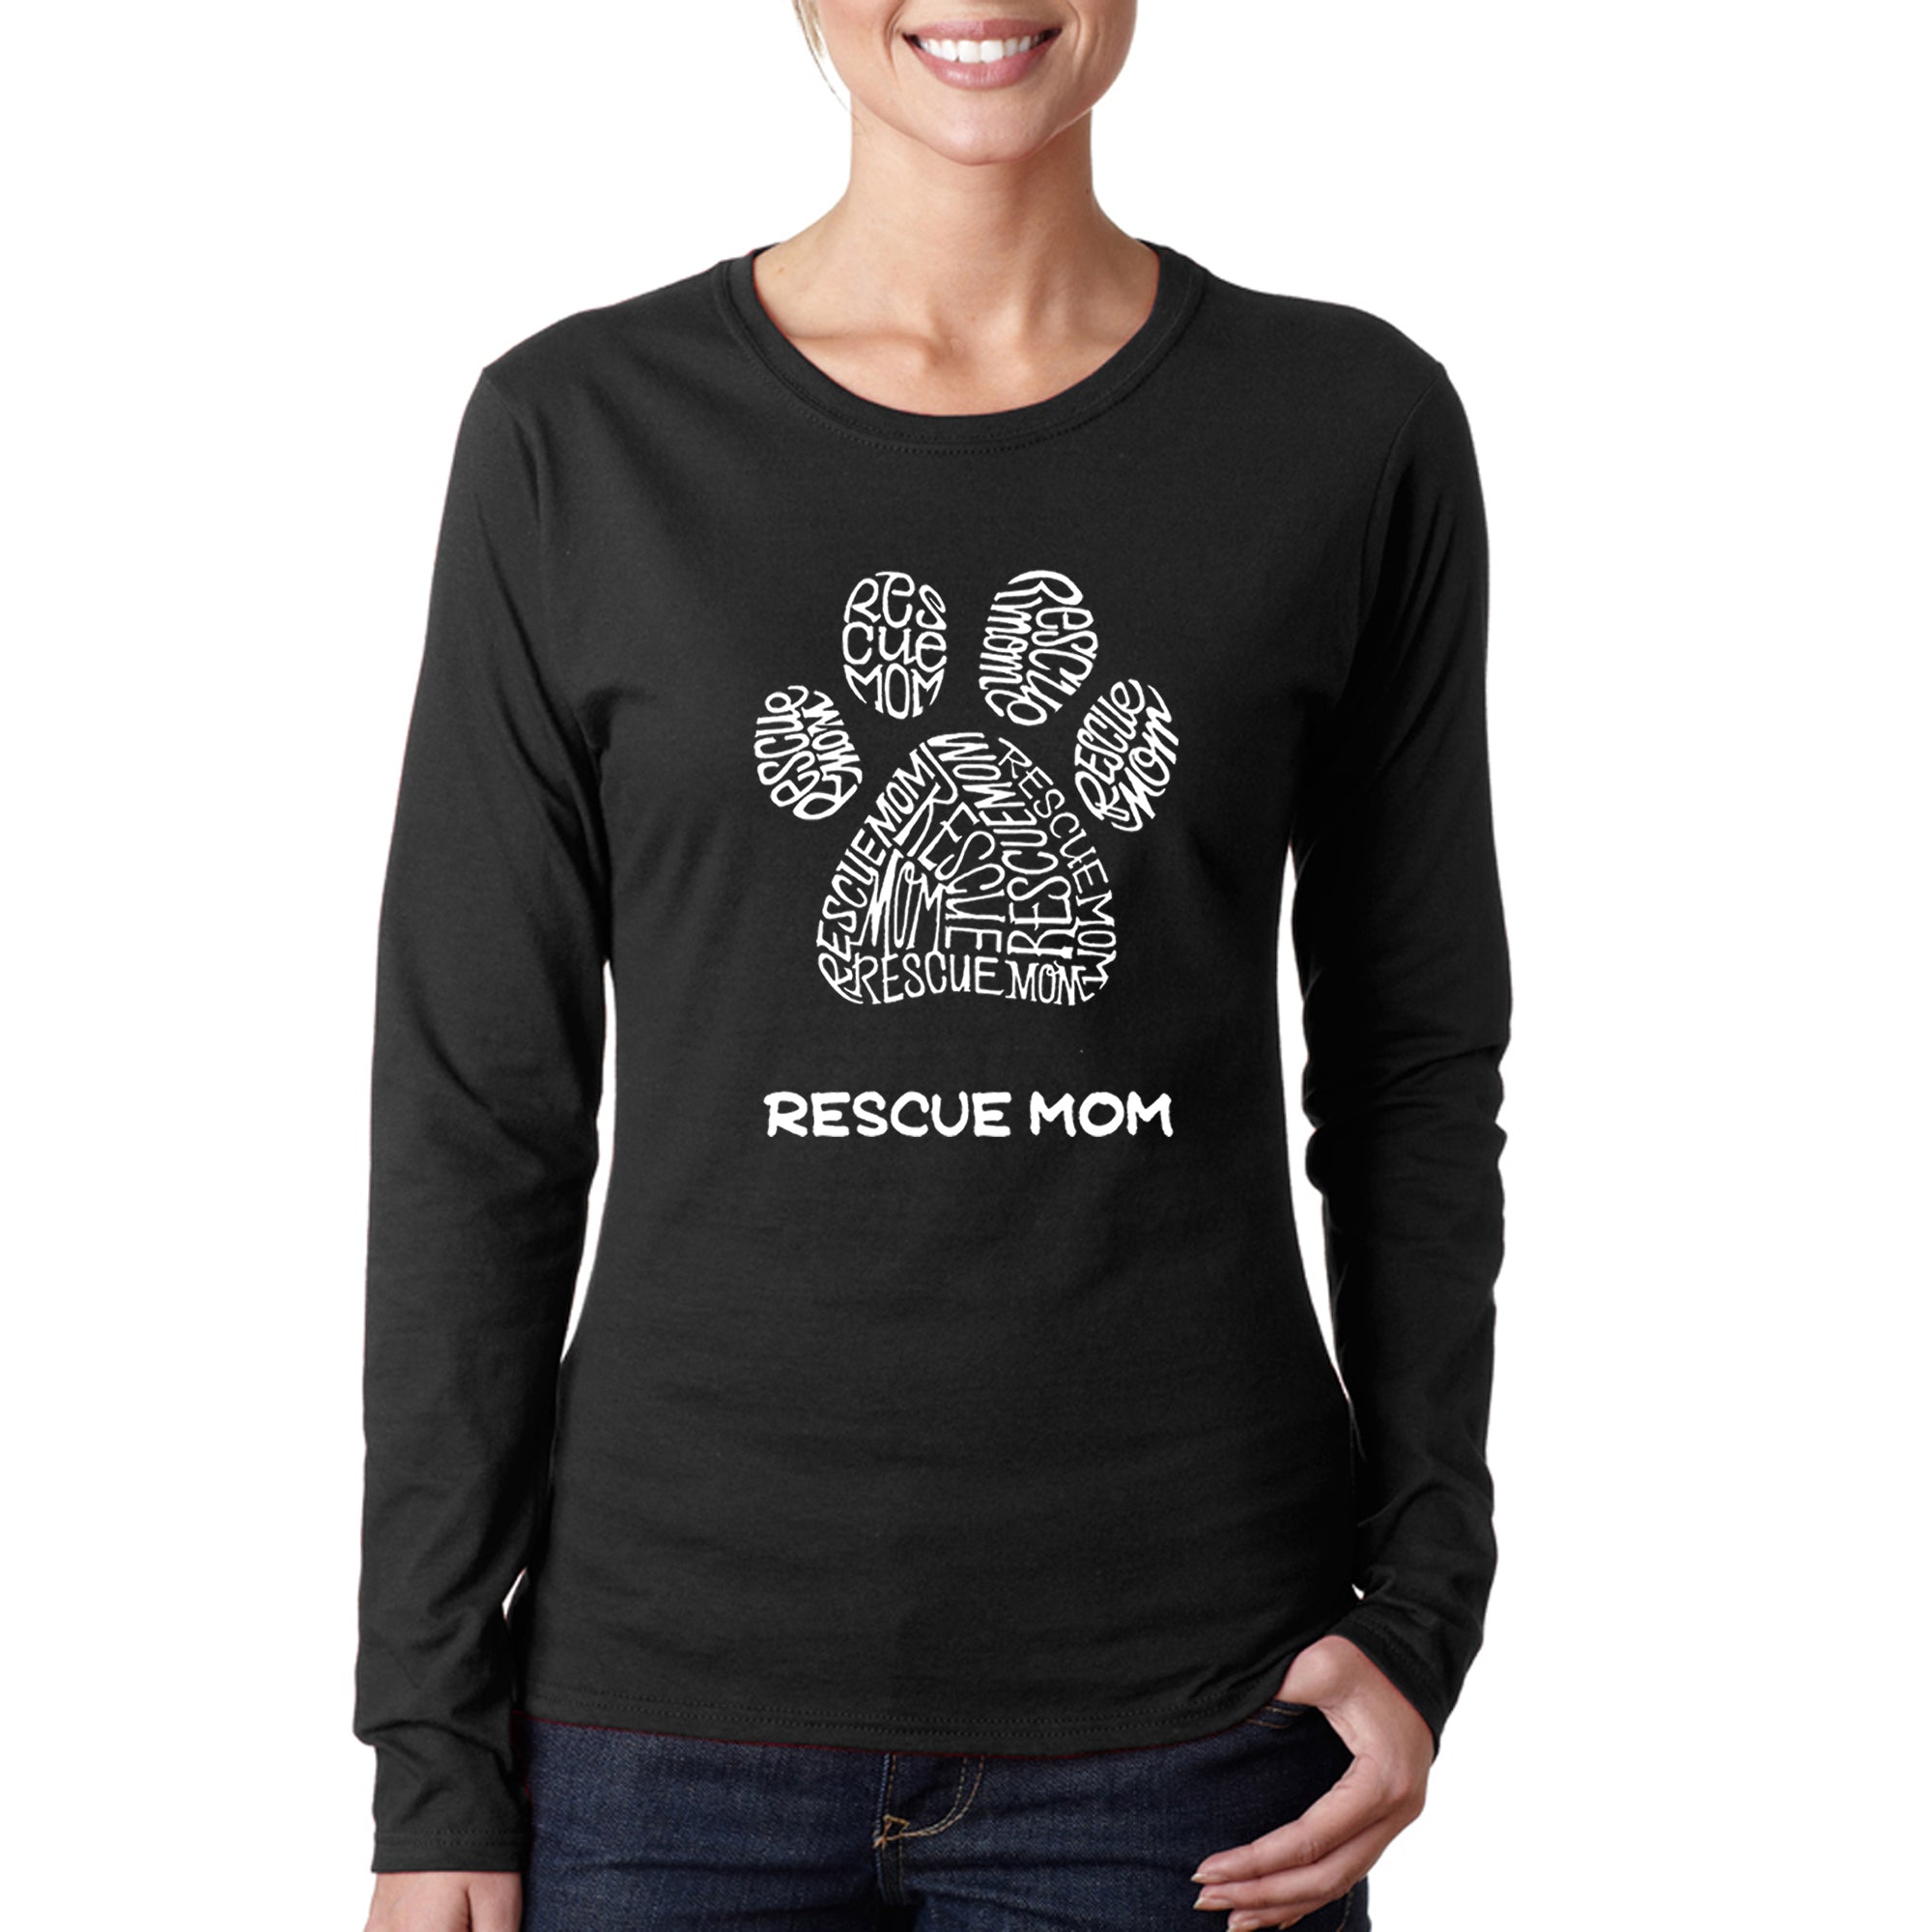 Rescue Mom - Women's Word Art Long Sleeve T-Shirt - Pink - Medium